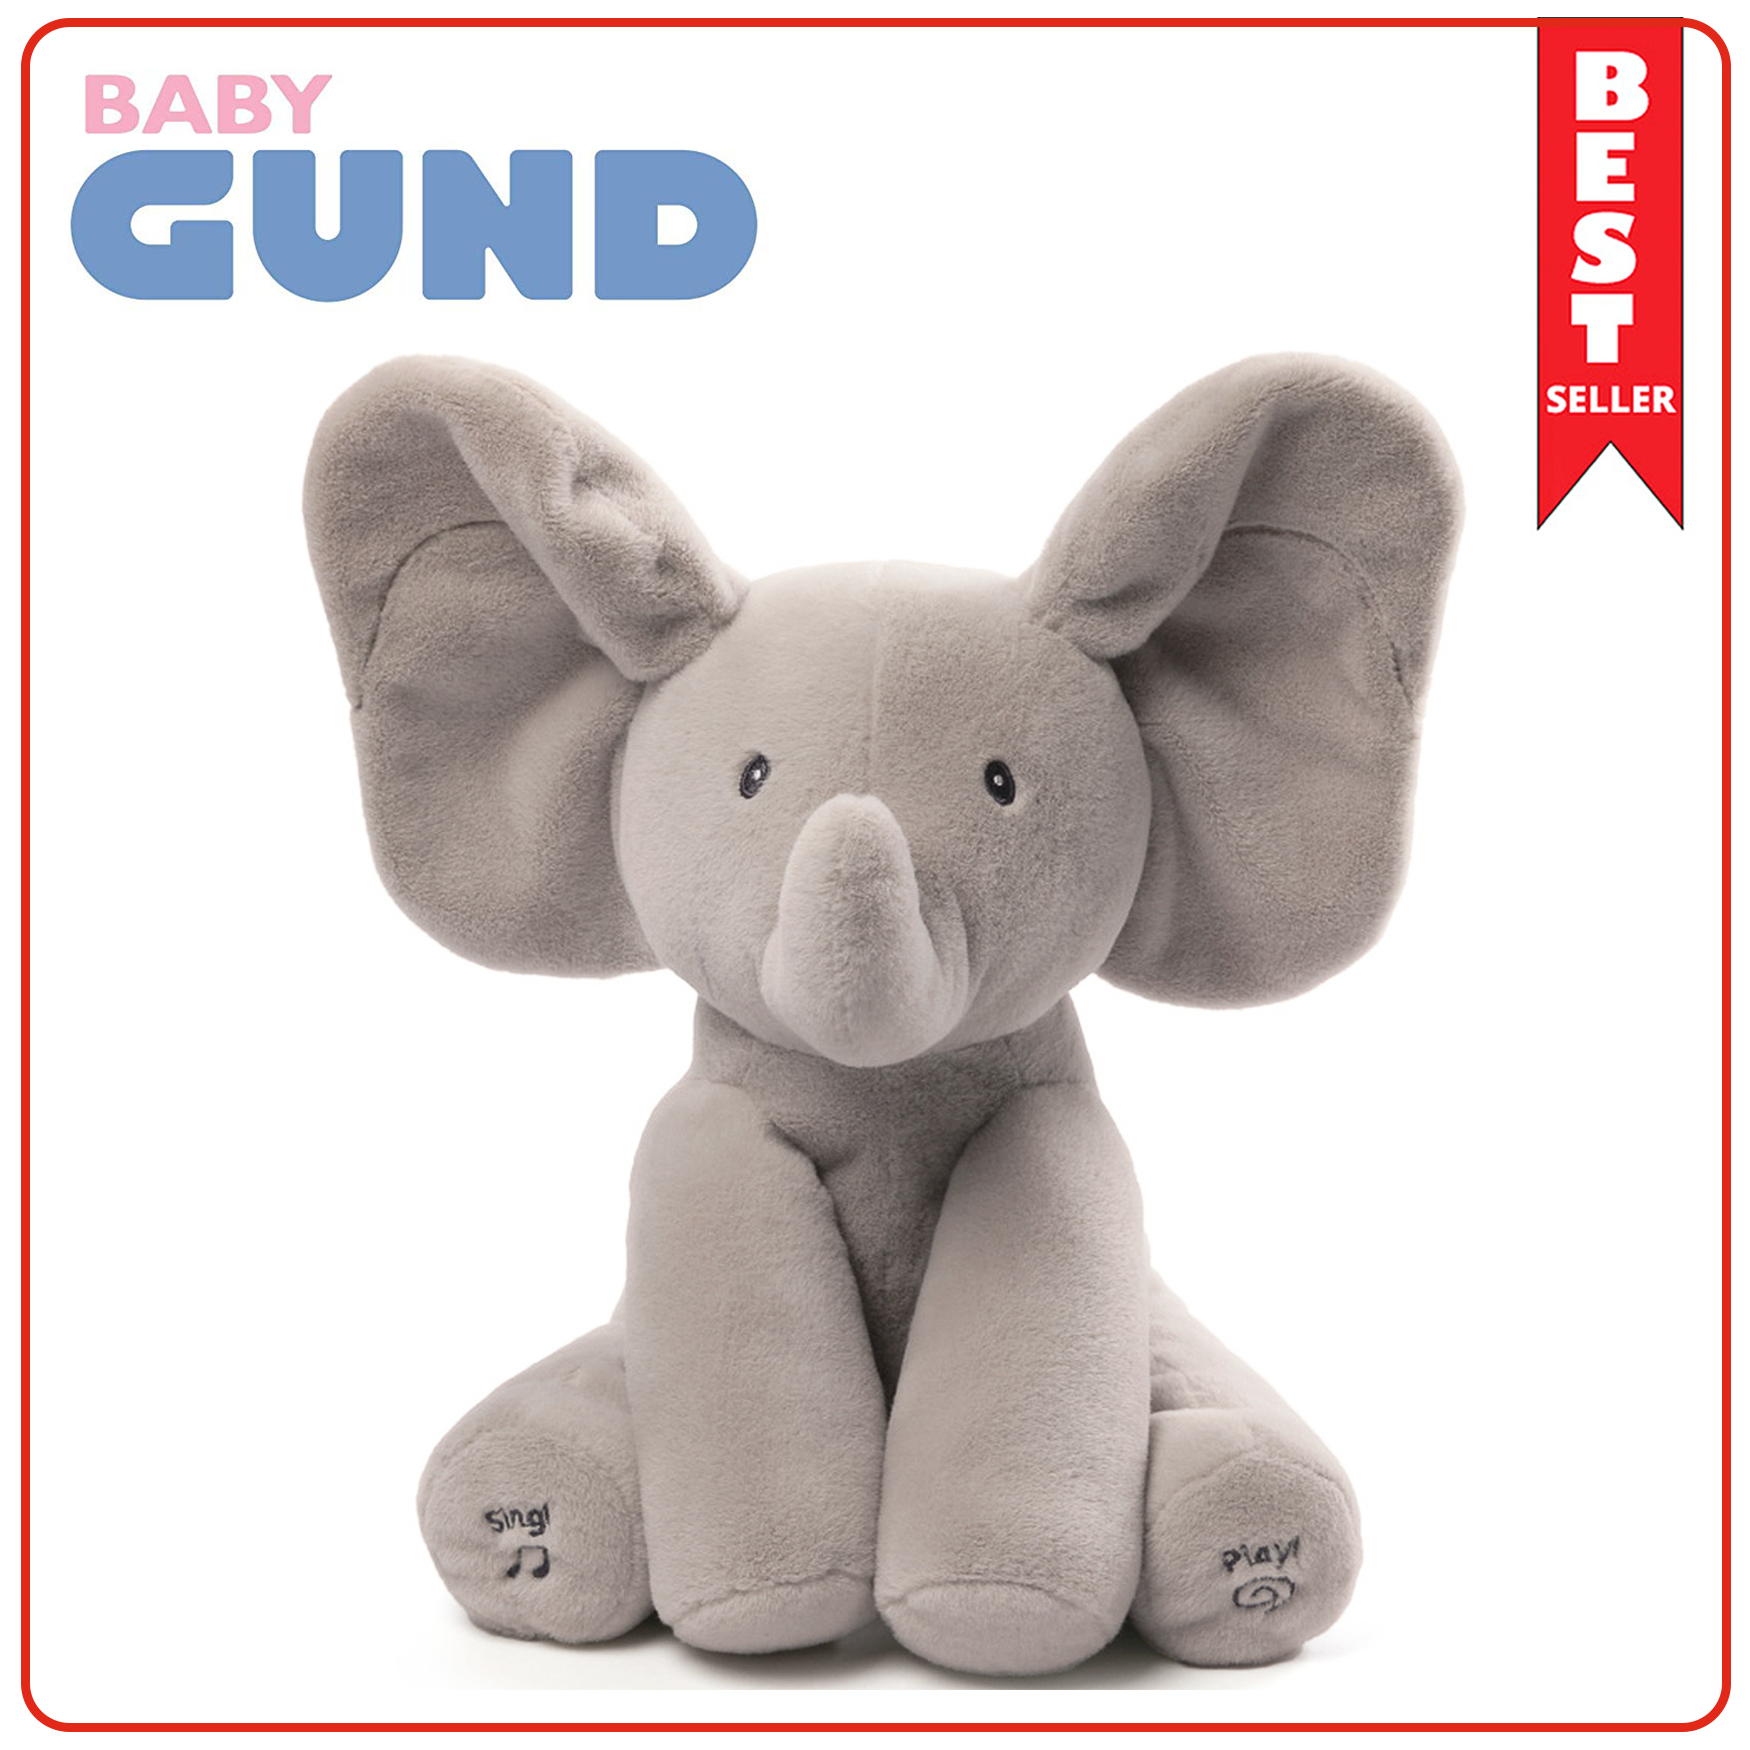 gund animated flappy elephant